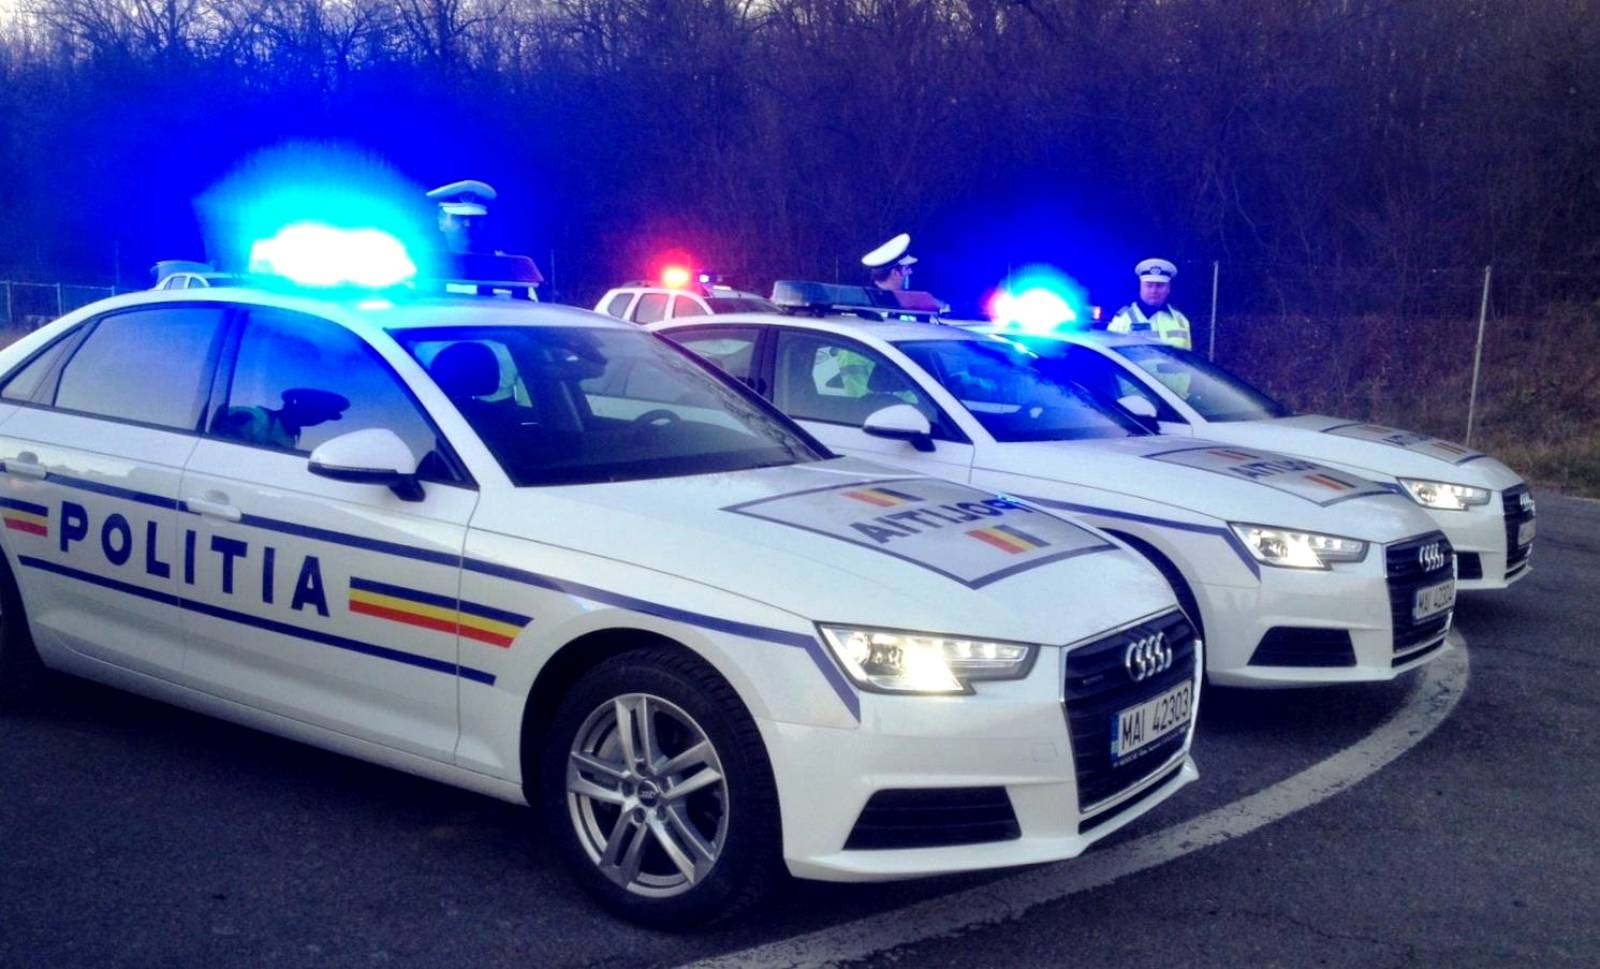 Police roumaine Attention au conducteur